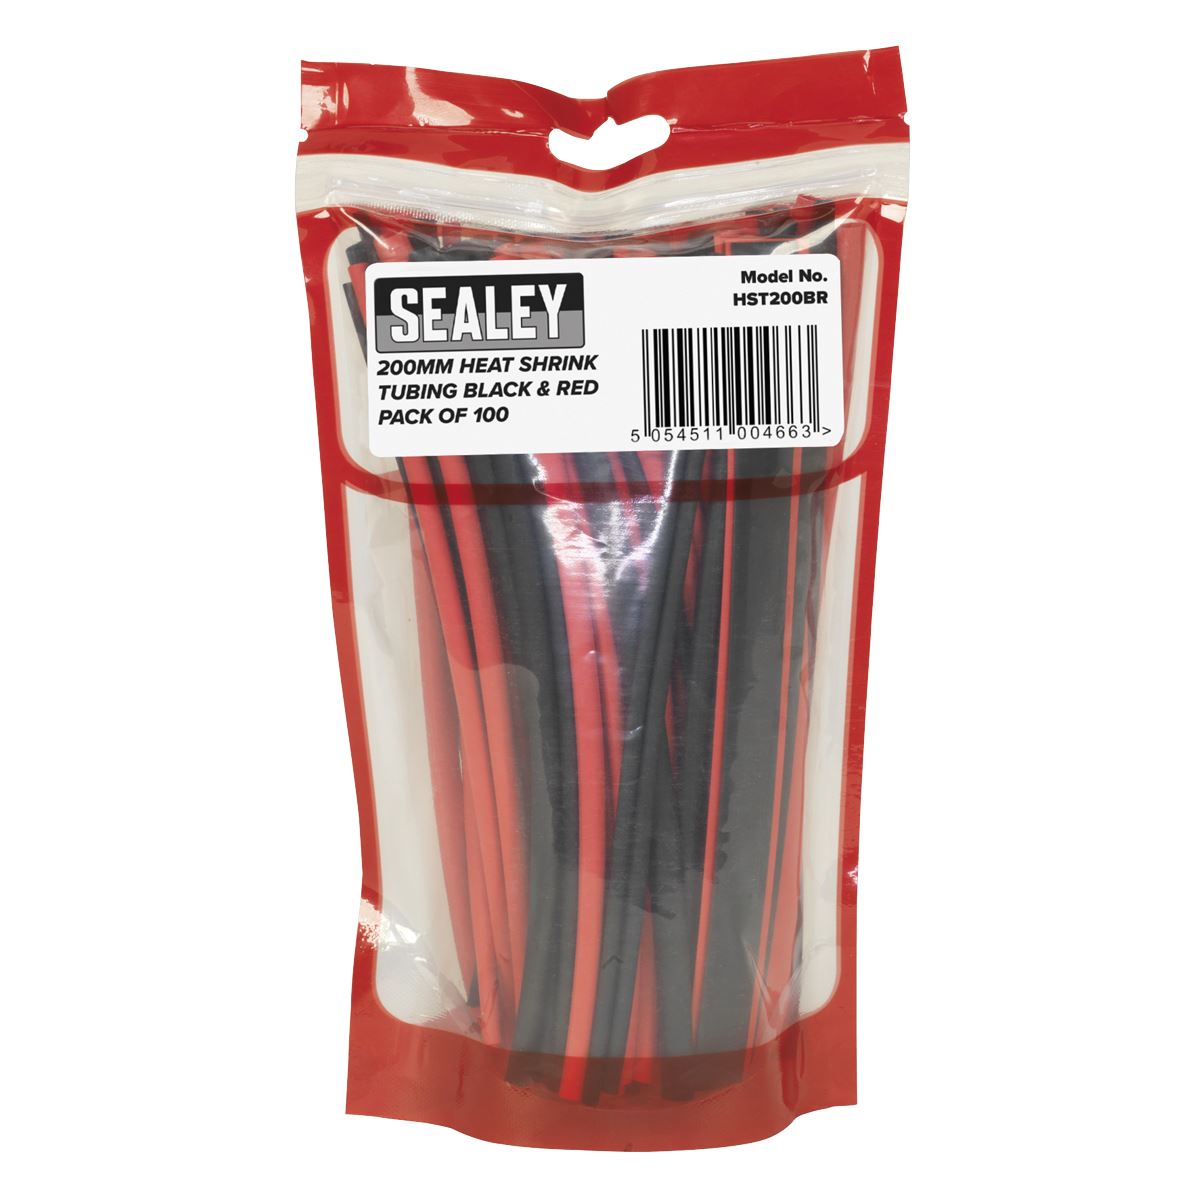 Sealey Heat Shrink Tubing Black & Red 200mm 100pc